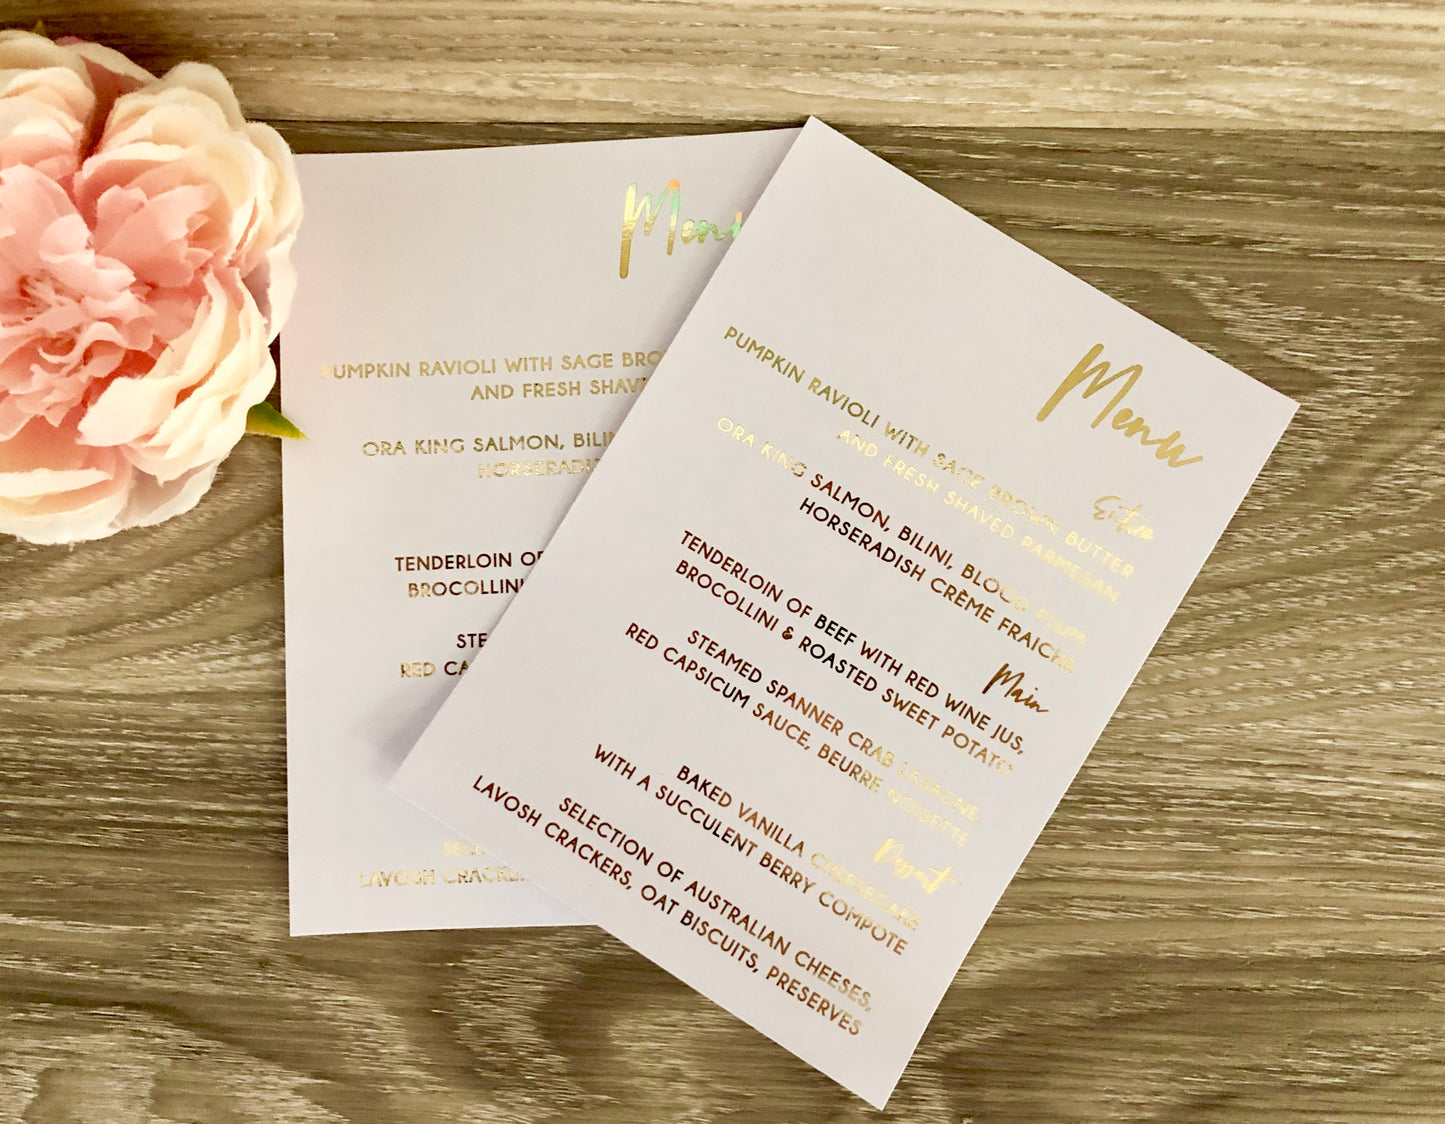 Wedding Menu Cards in Real Gold Foil - Glitzy Prints